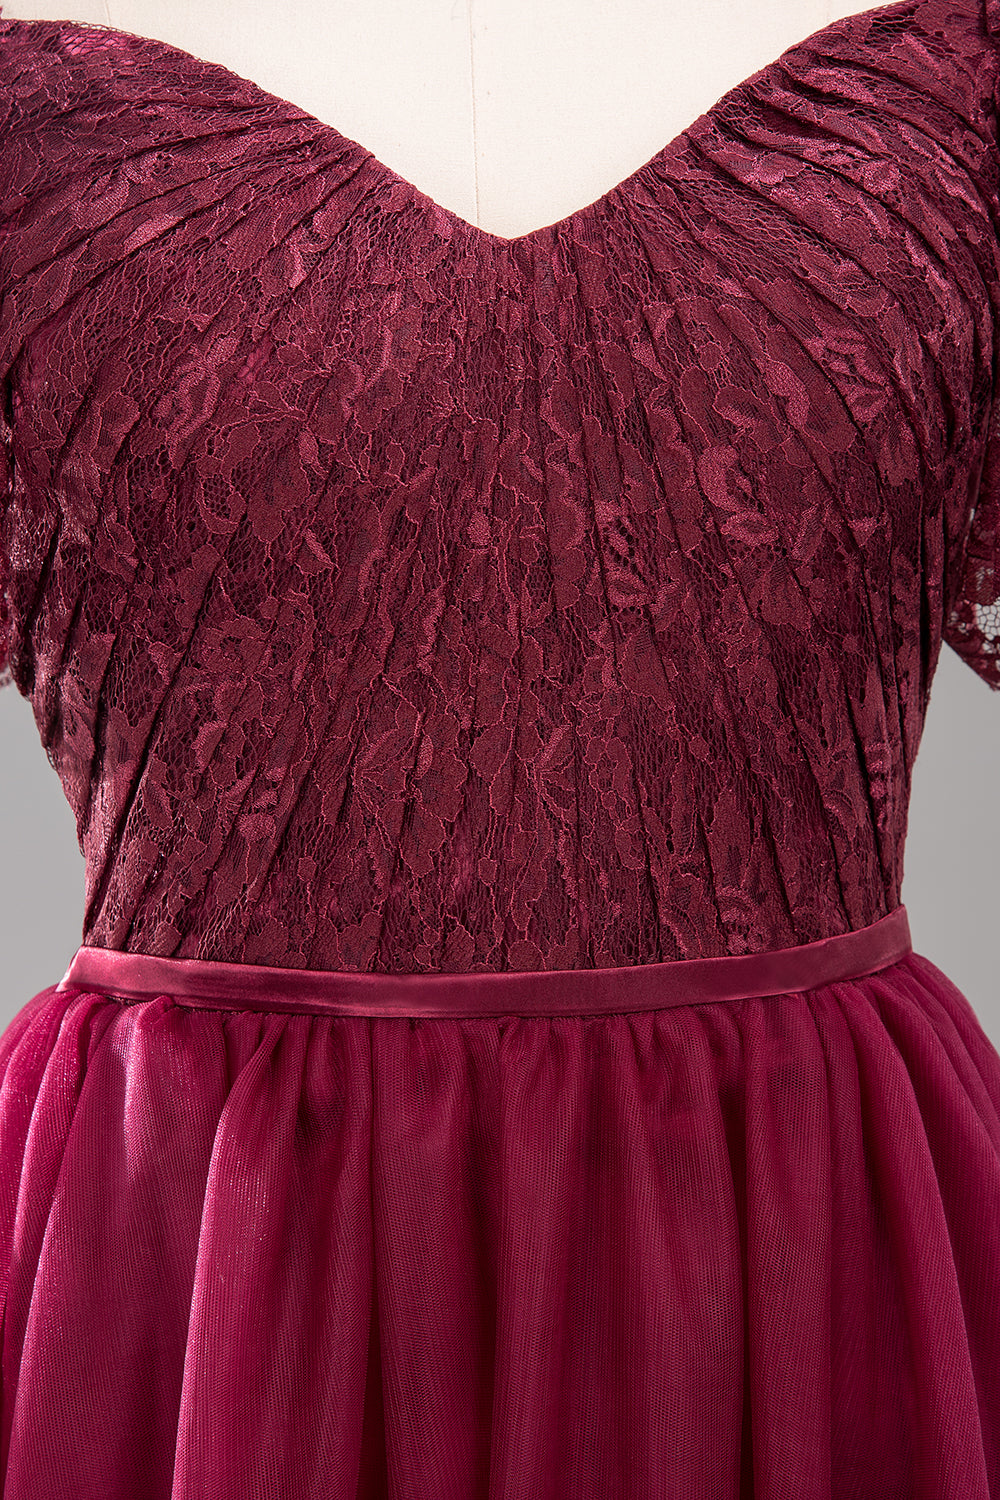 Affordable Chiffon Off-the-Shoulder Burgundy Lace Bridesmaid Dresses-27dress